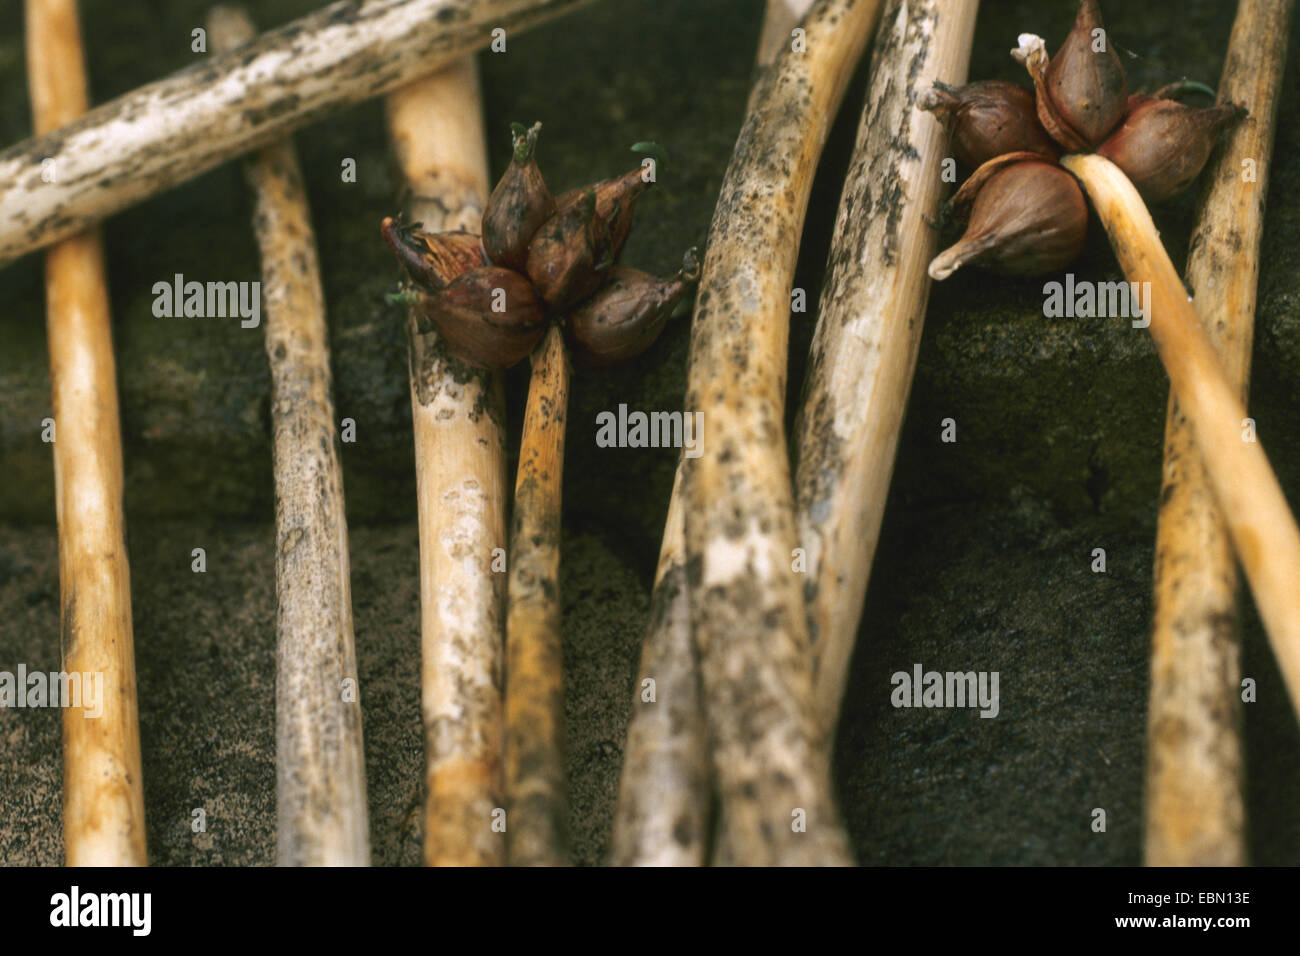 Garden onion, Bulb Onion, Common Onion (Allium cepa var. proliferum, Allium proliferum, Allium x proliferum), with fungal infestation Stock Photo